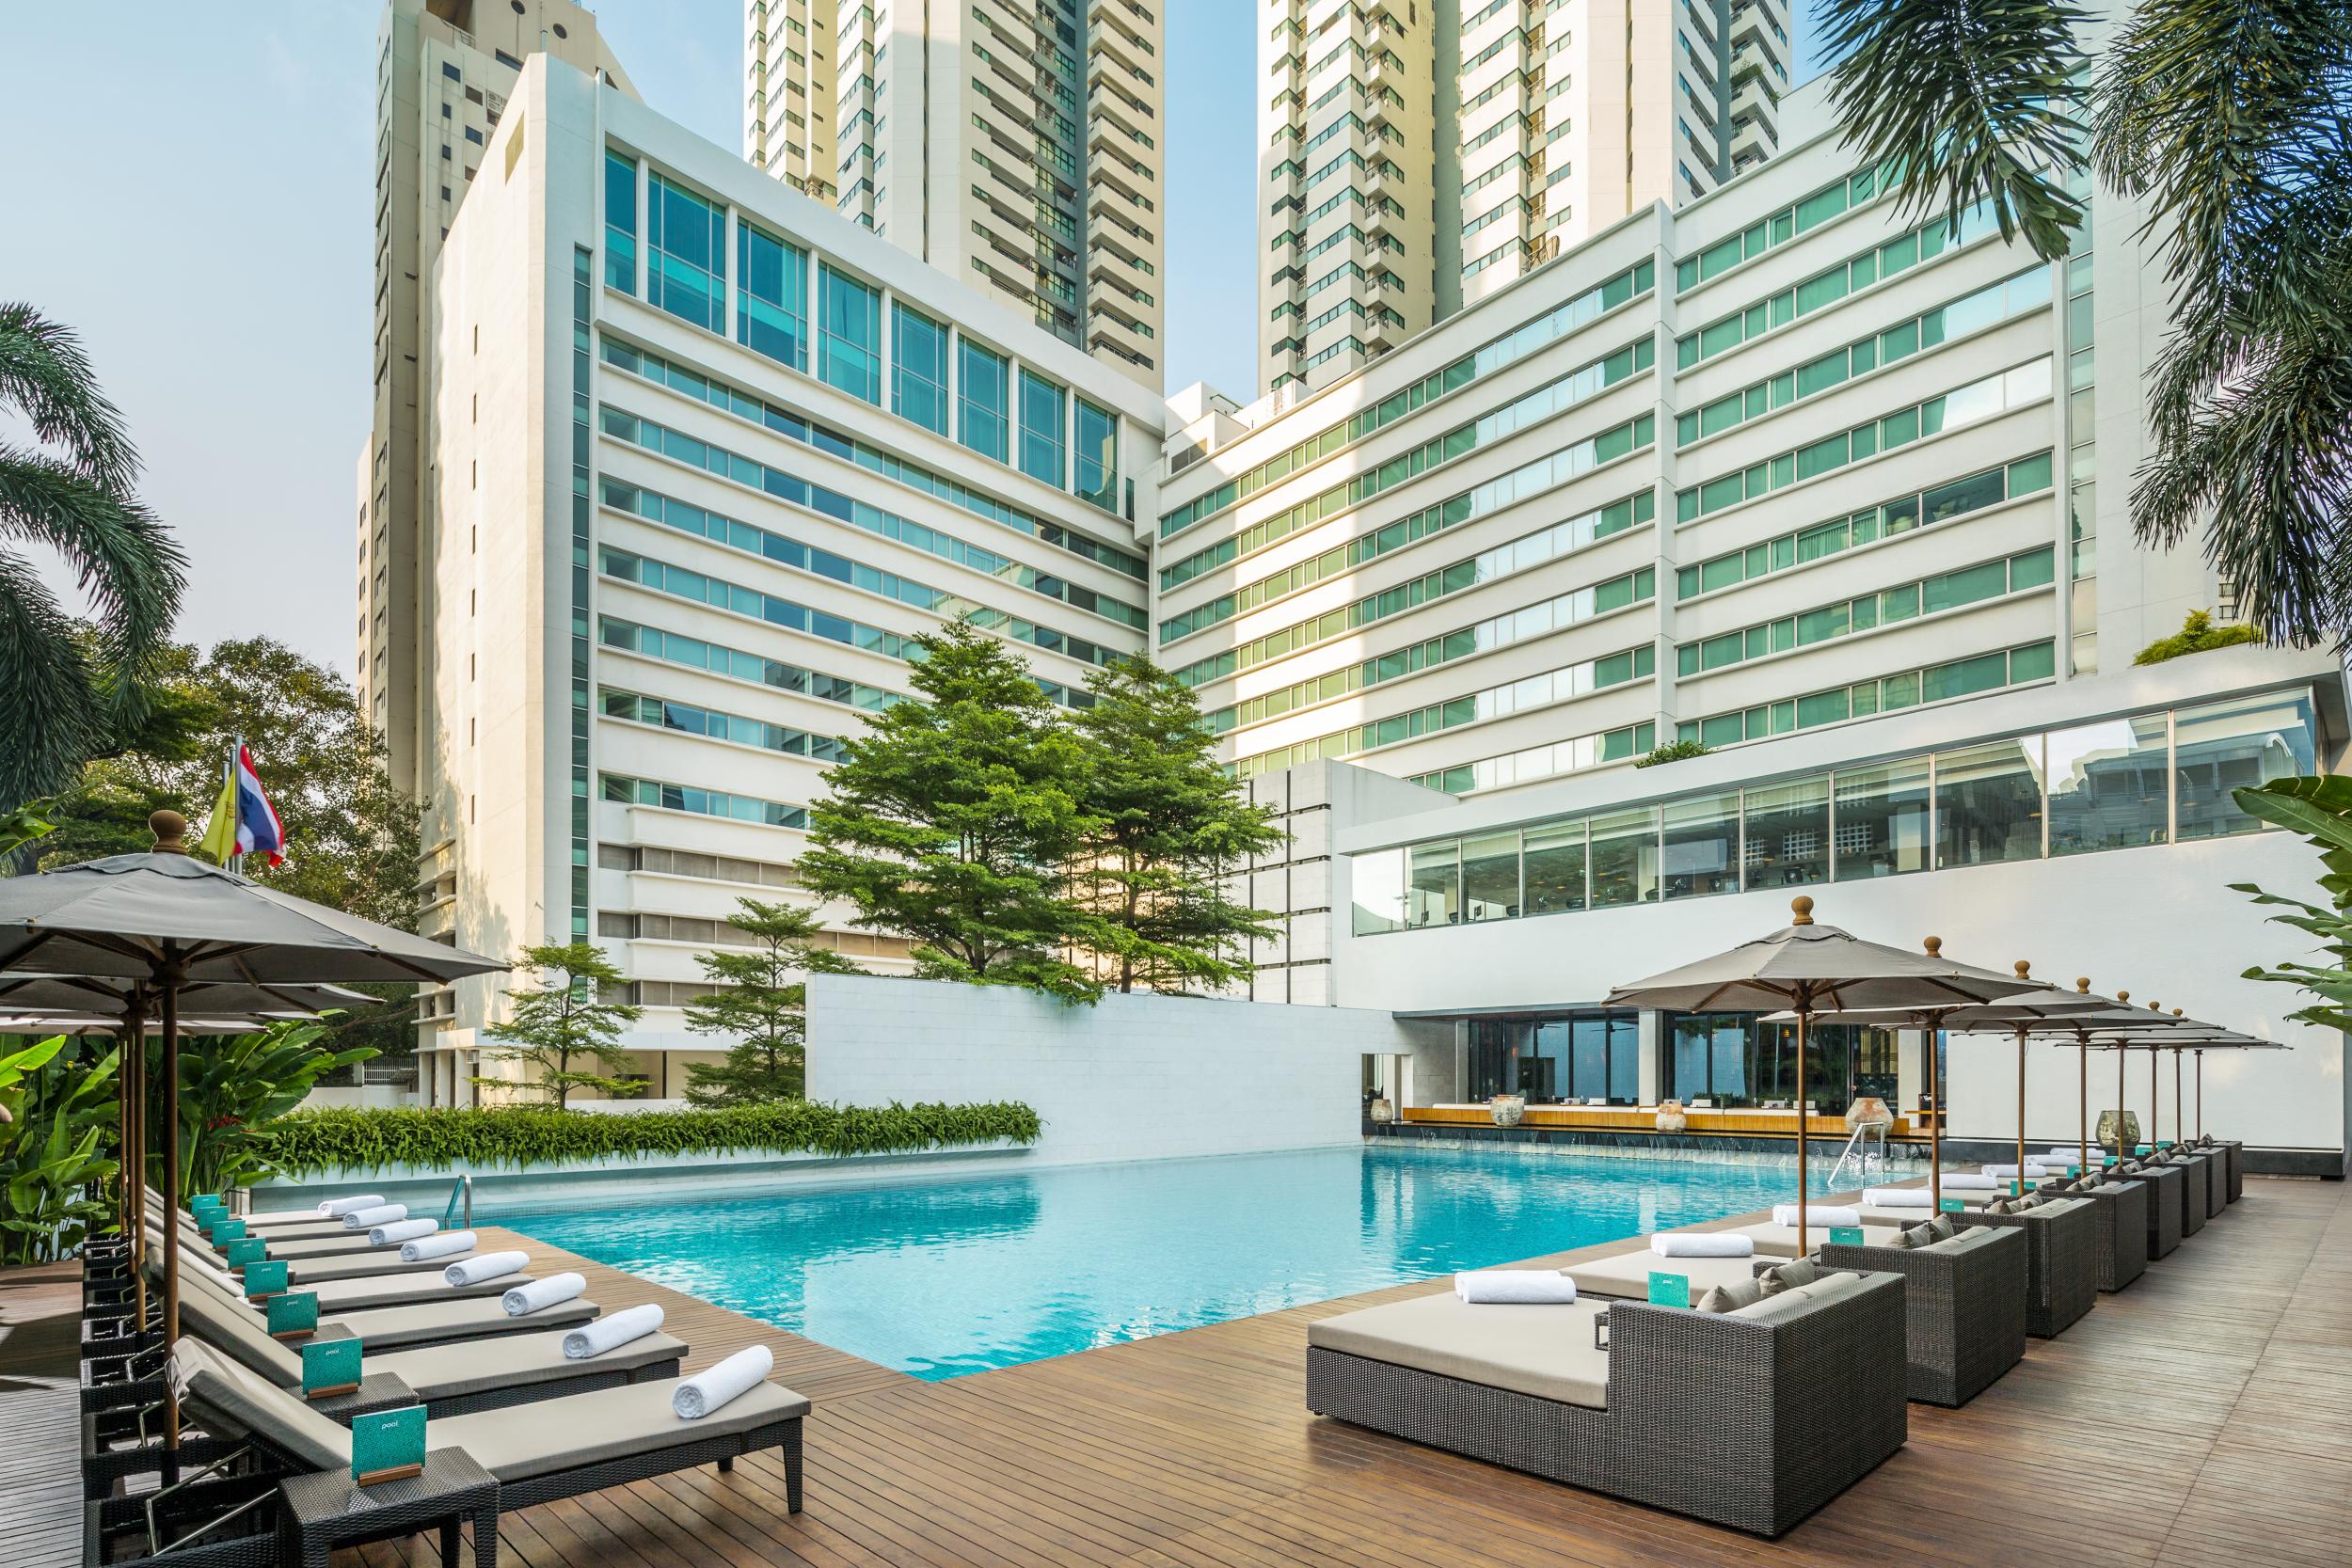 The pool at the COMO Metropolitan Bangkok is perfect for posing